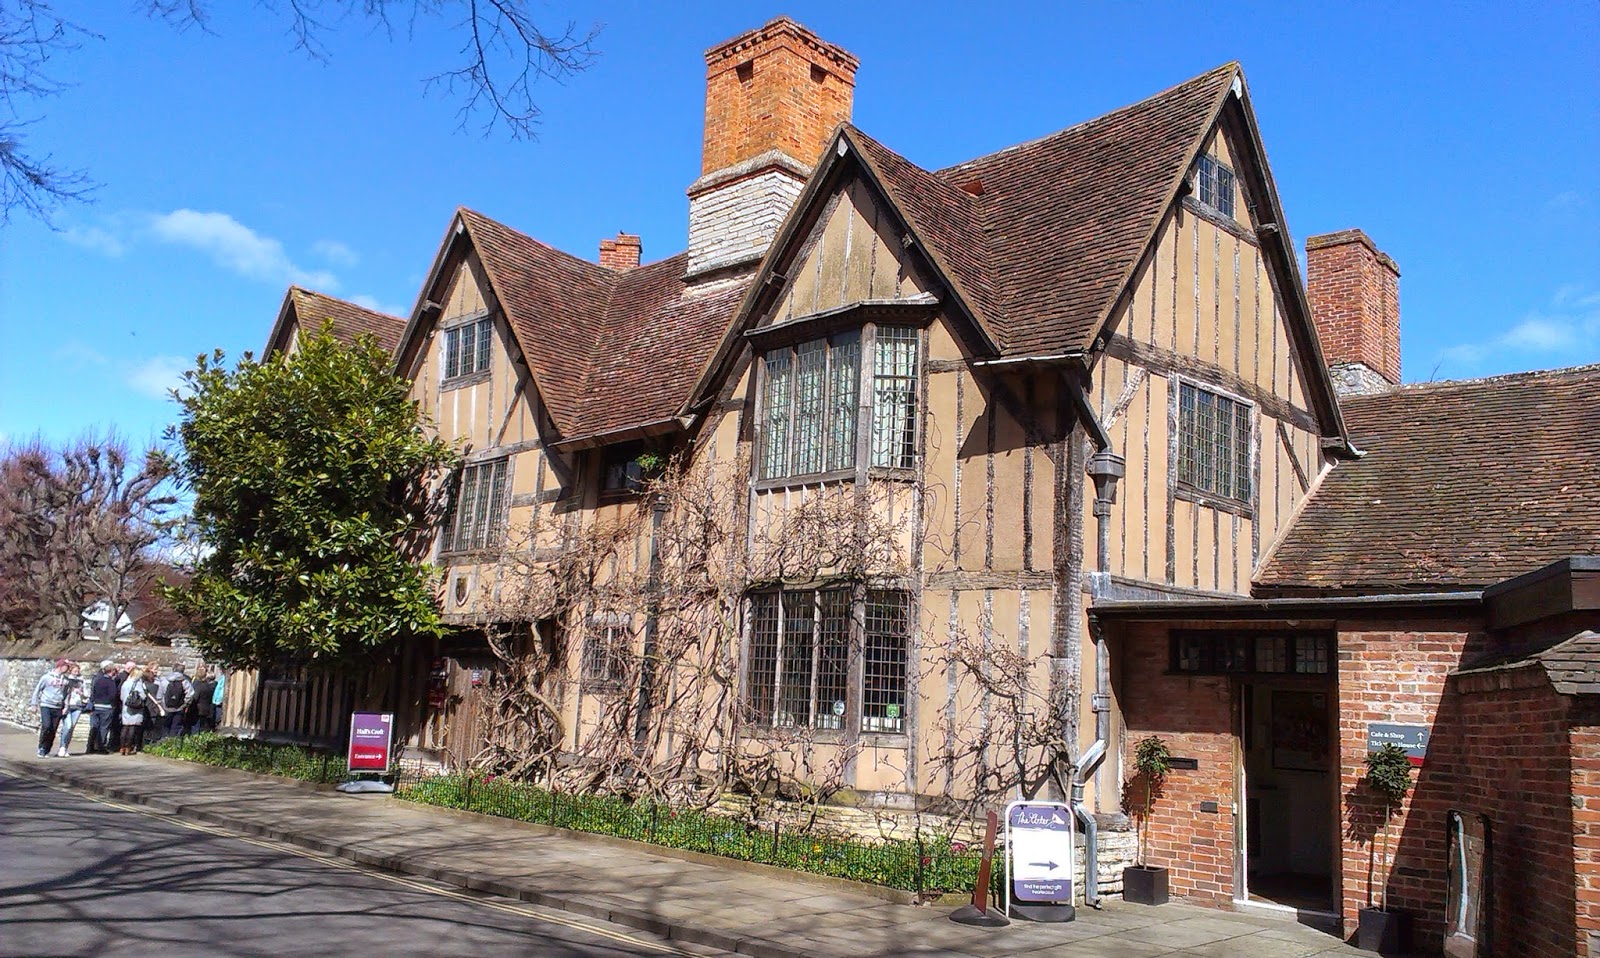 Hall's Croft, Stratford upon Avon